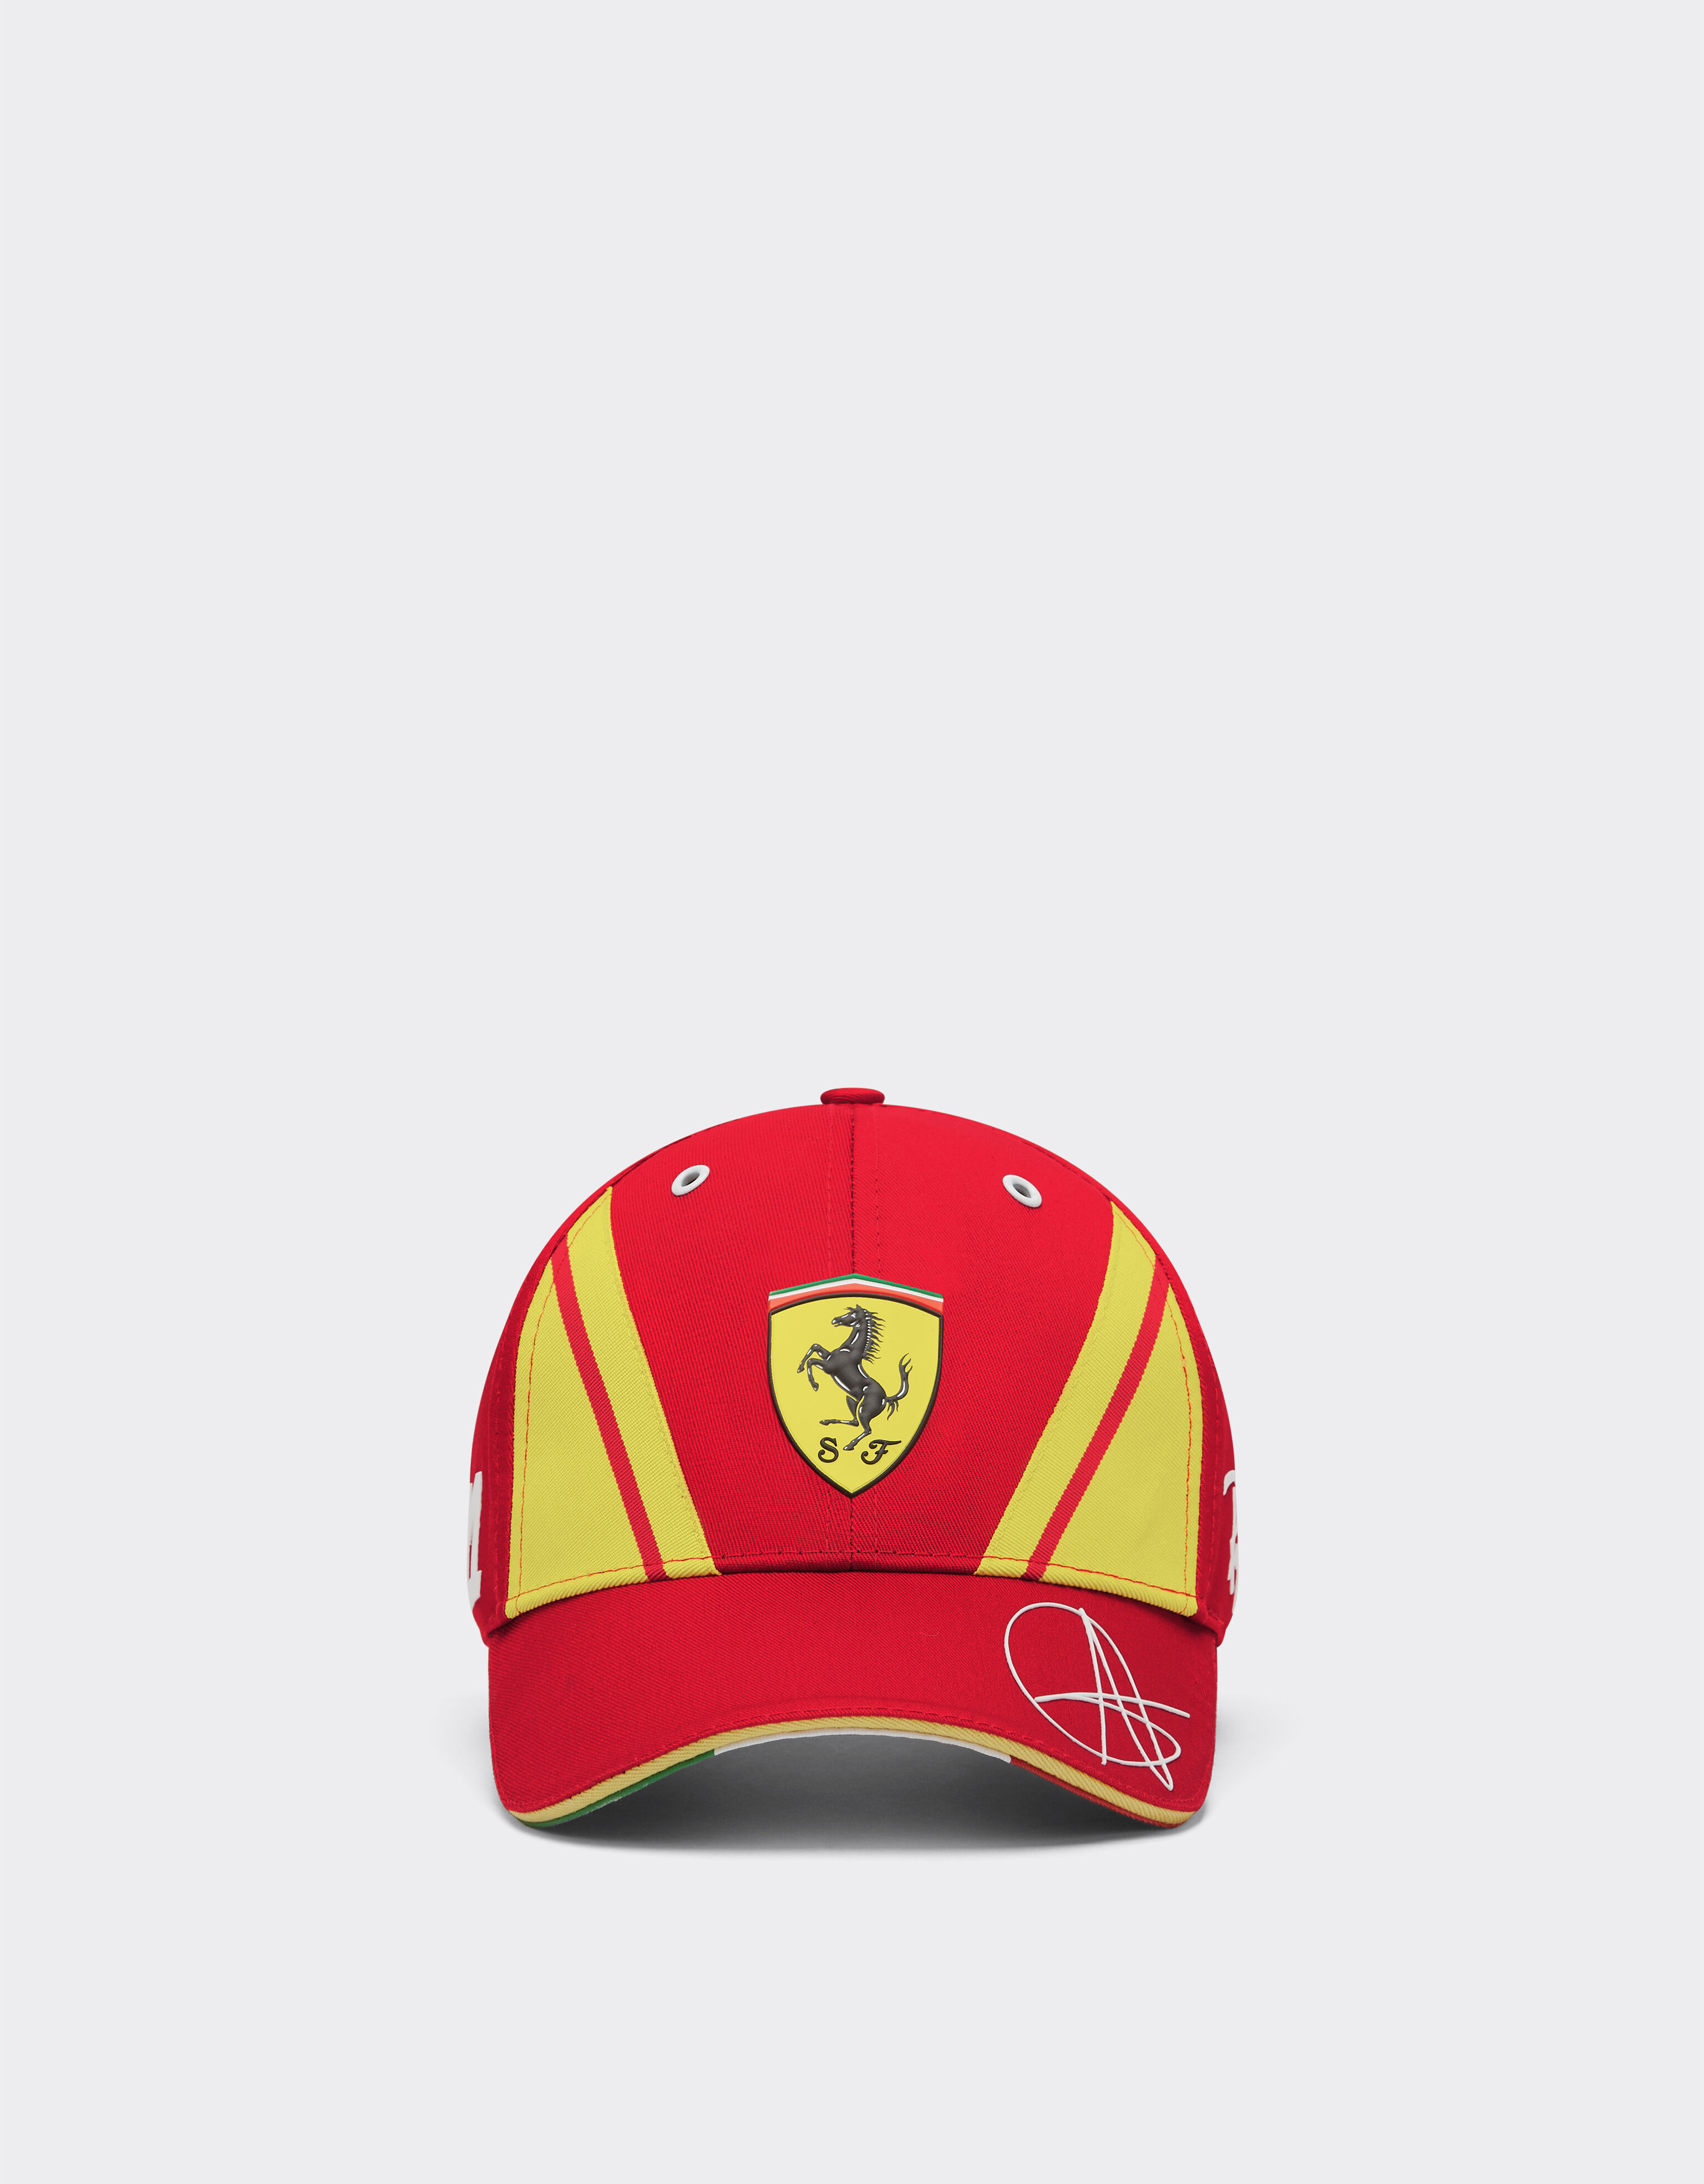 Ferrari Ferrari Giovinazzi Hypercar Hat - Limited Edition Red F1326f